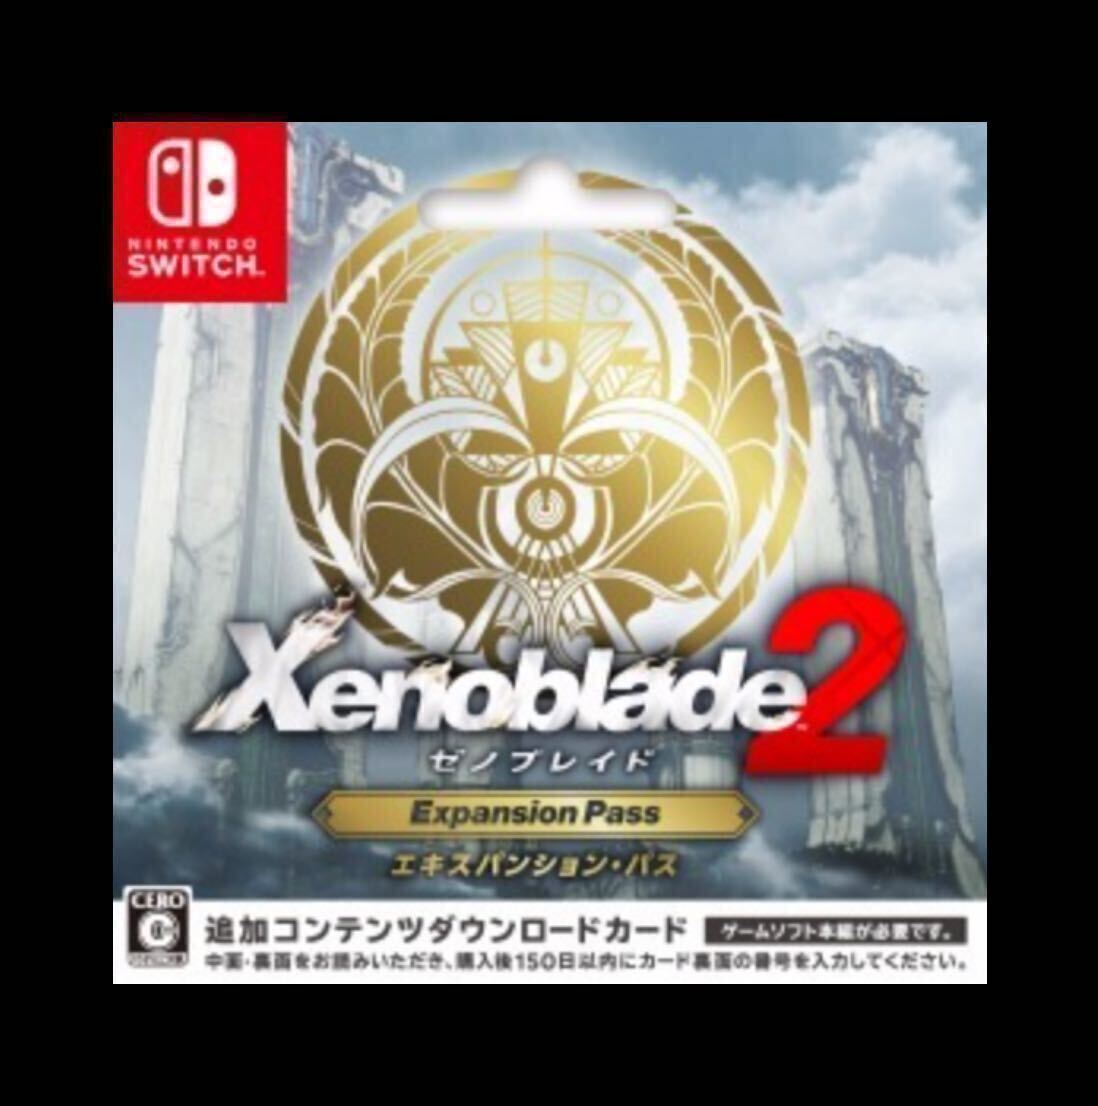 Xenoblade2 расширение Pas zeno Blade 2 дополнение содержание 